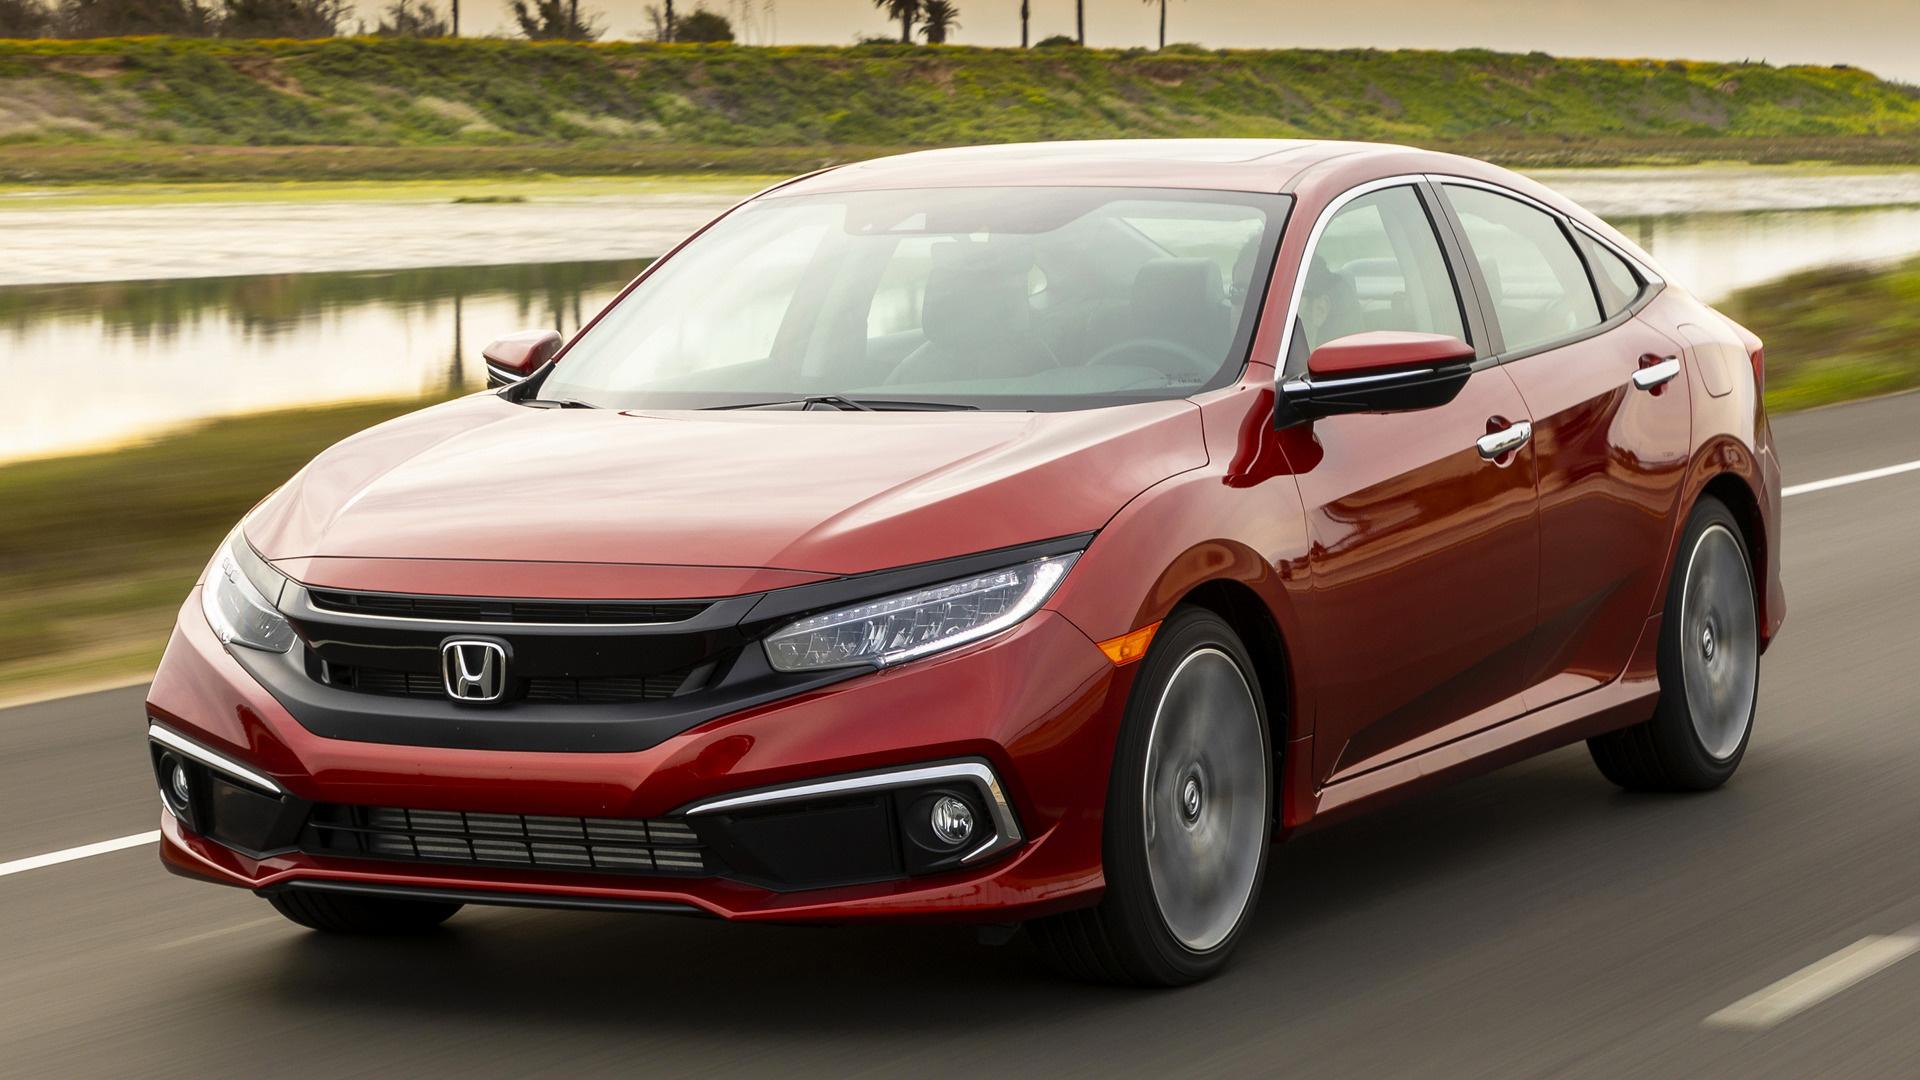 Honda Civic Sedan (US) and HD Image. Car